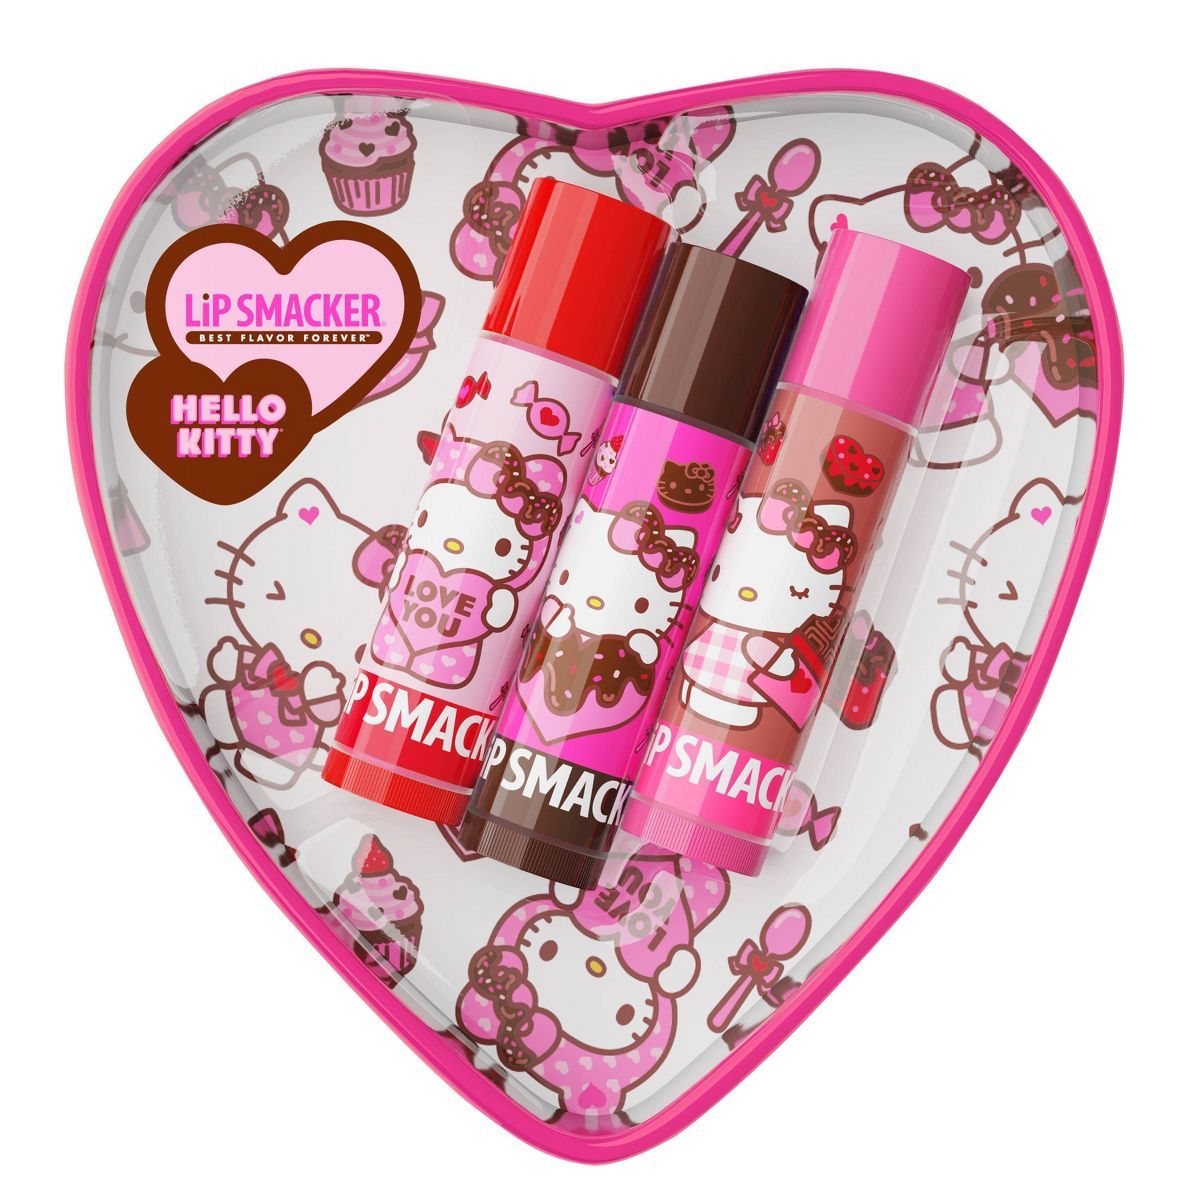 Lip Smacker Lip Balm Heart Tin - 1.3oz/3pc | Target